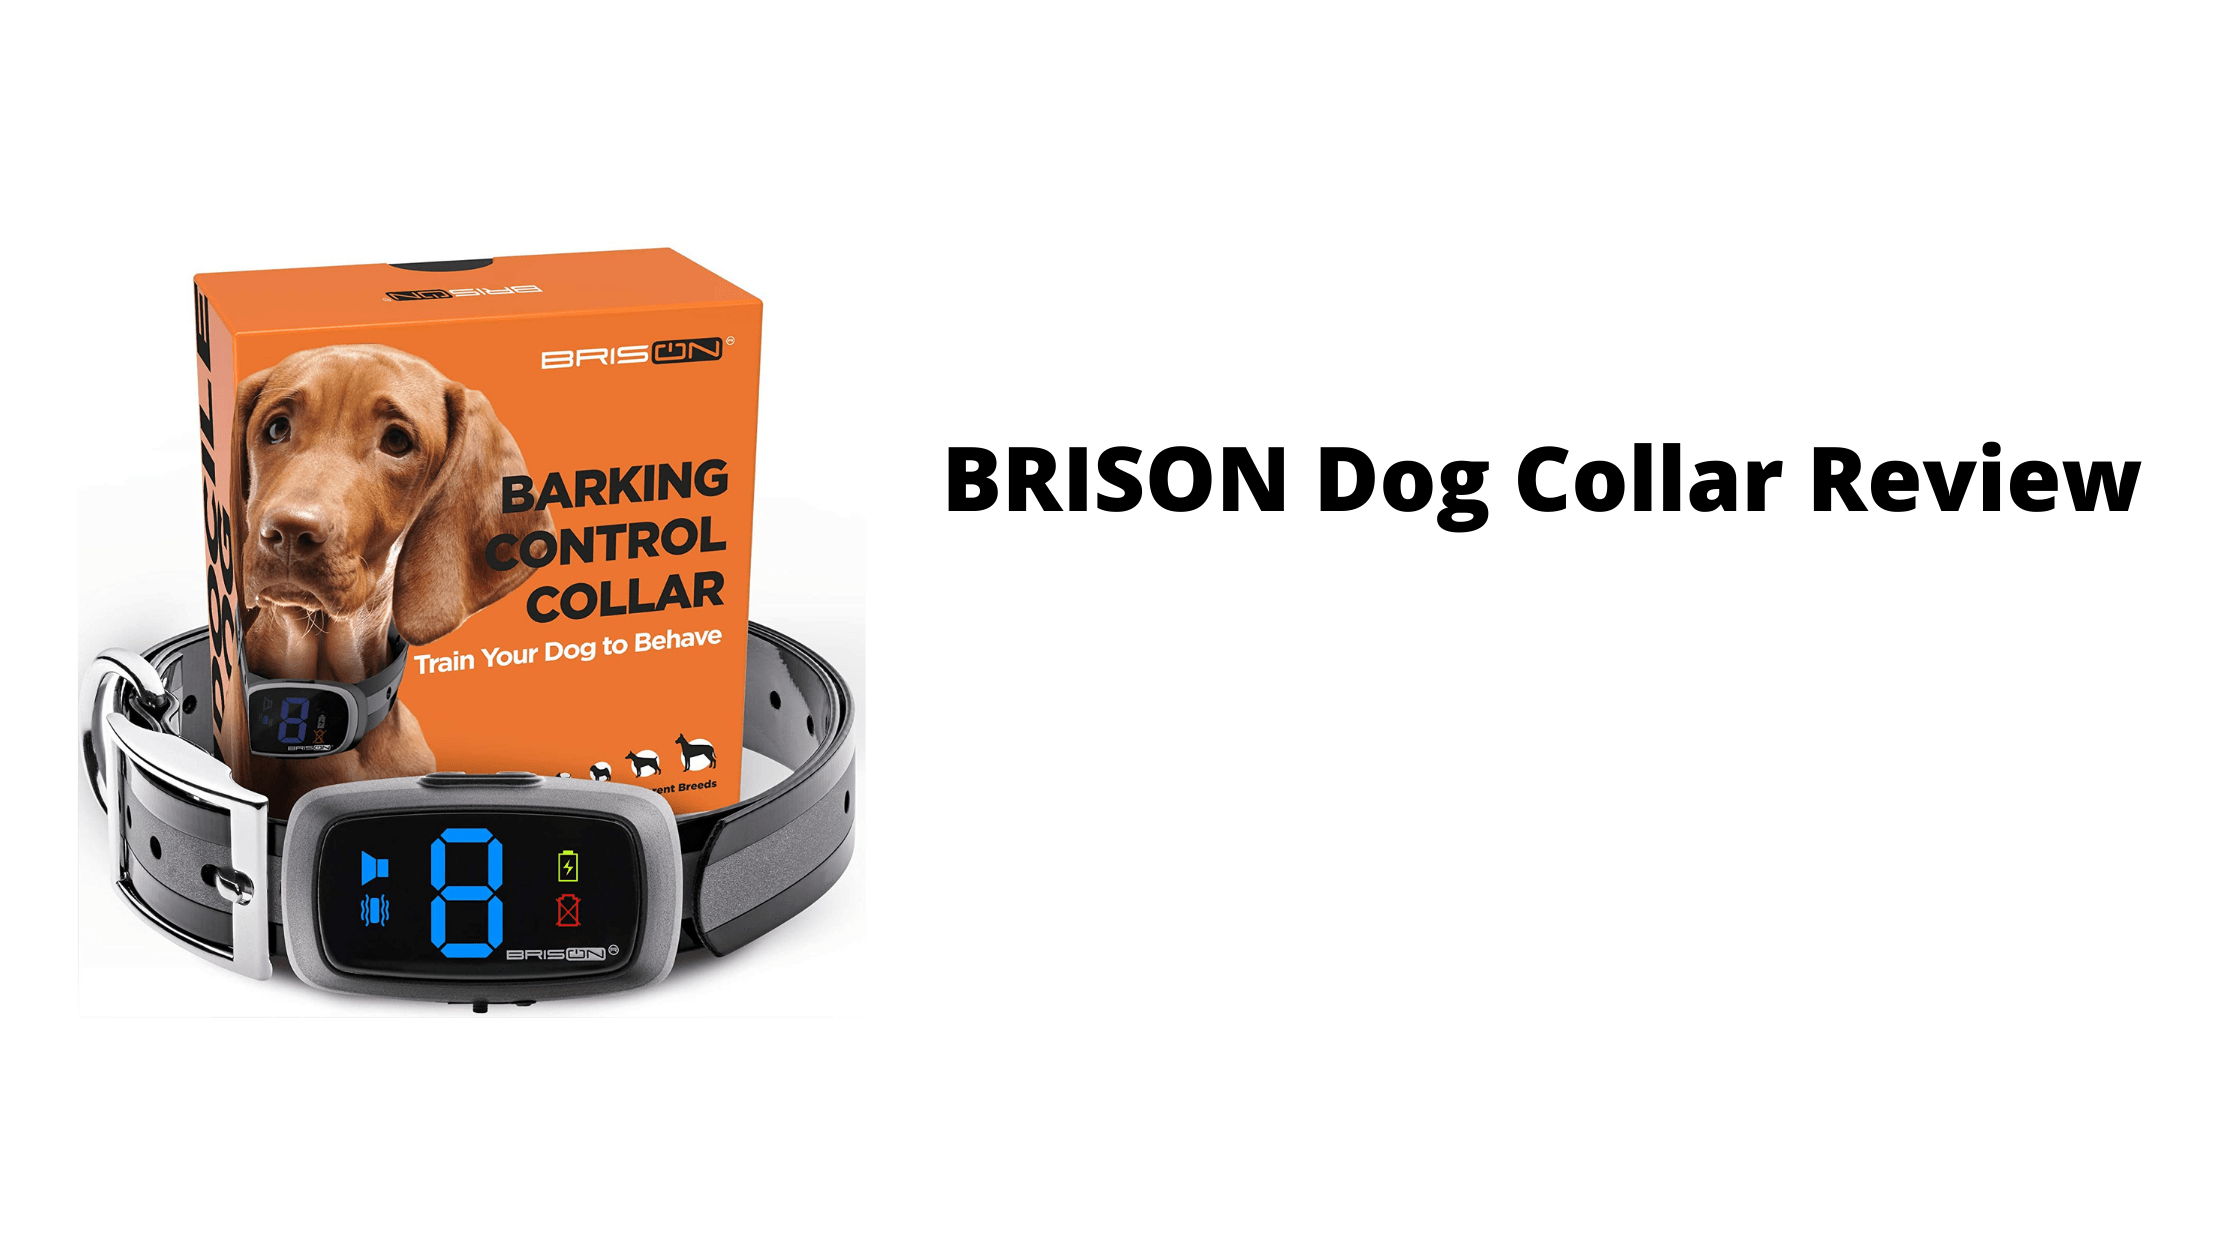 BRISON Dog Collar Review